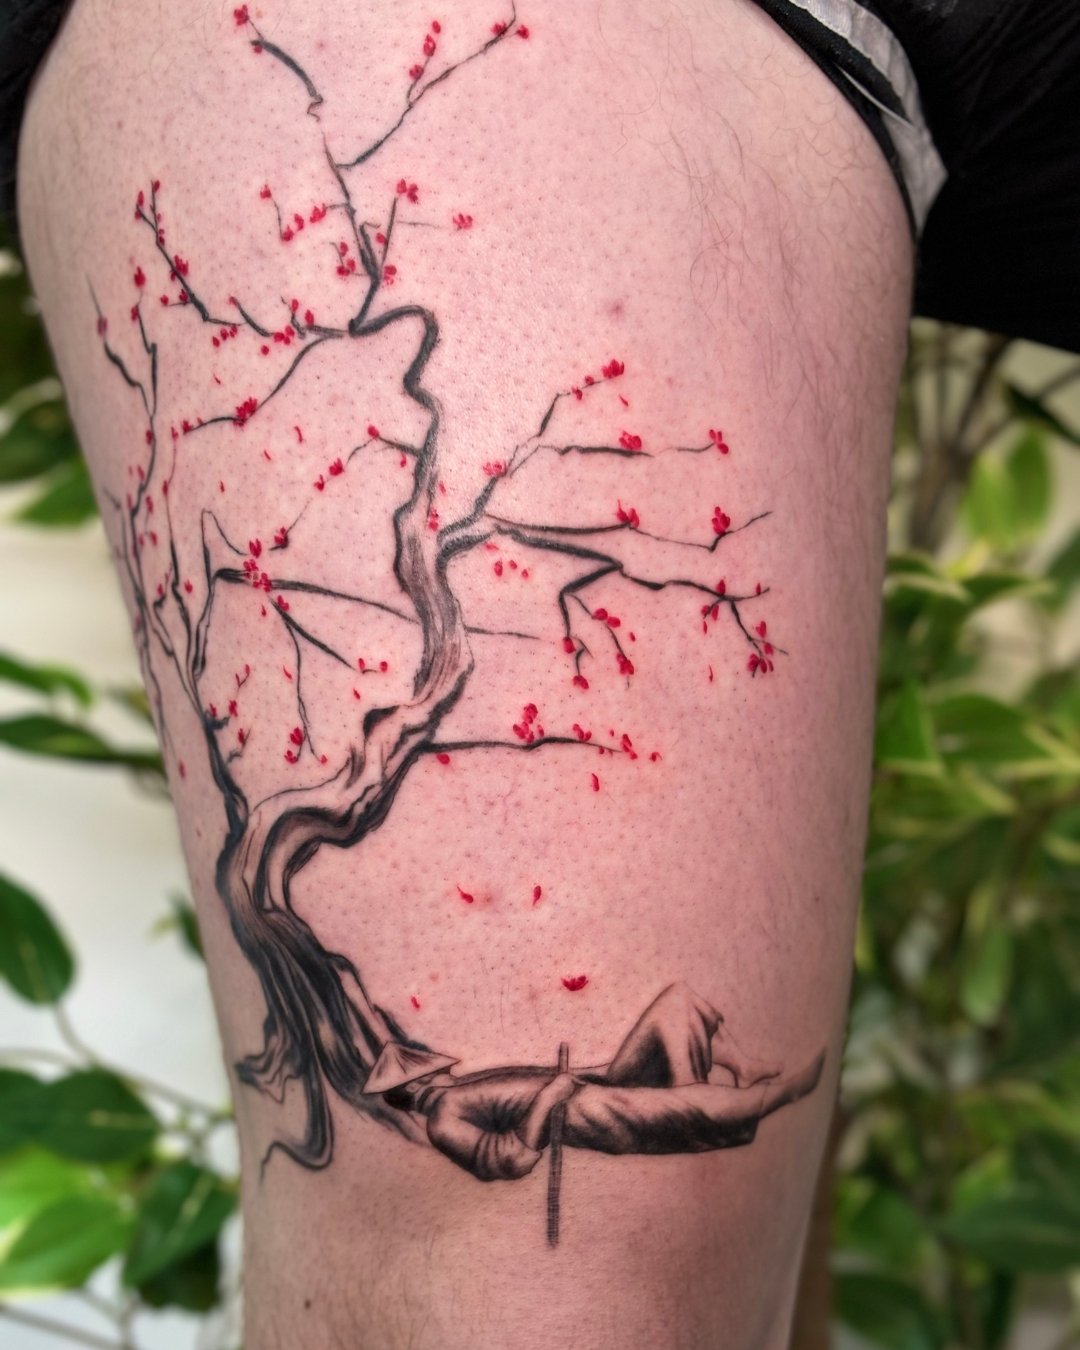 Samoura&iuml; sous son cerisier 🌸
R&eacute;alis&eacute; par @saithong.tattoo 
&bull;
&bull;
&bull;
#cerisier #tattoo #samurai #ink #tatouage #tattoo #lyontattoo #saithong #tatoueuse